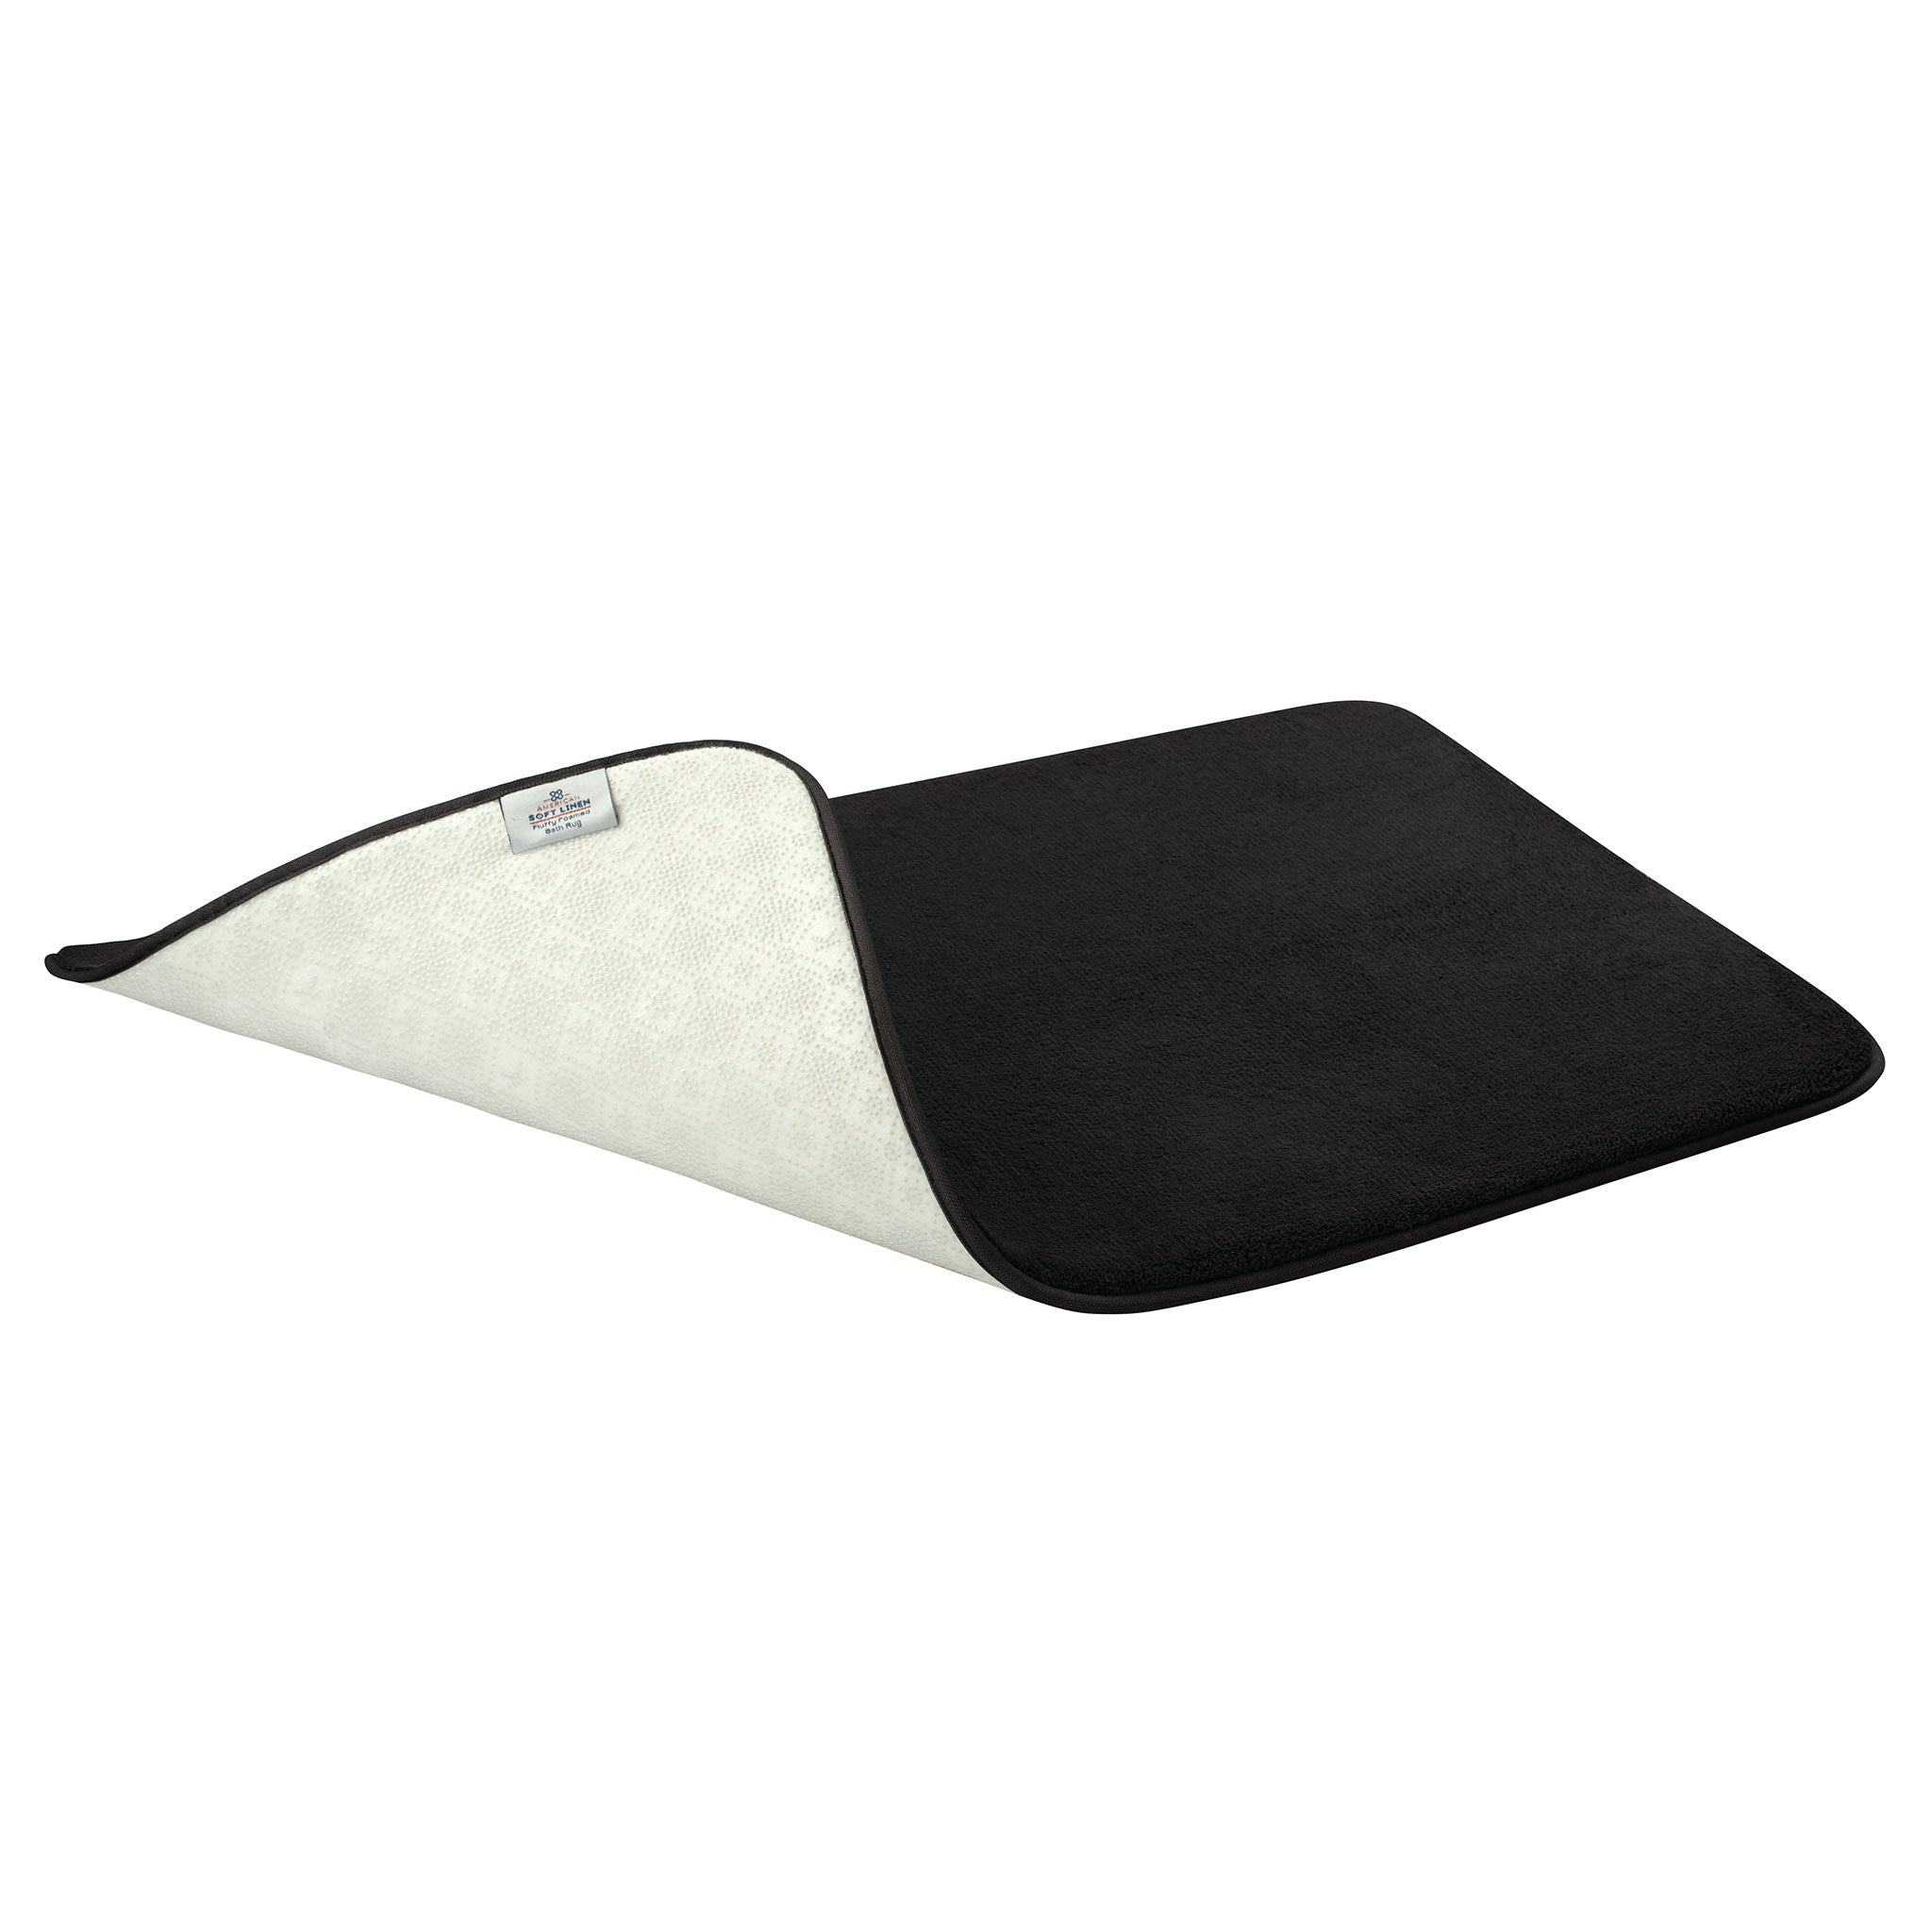 American Soft Linen - Fluffy Foamed Non-Slip Bath Rug-21x32 Inch - Black - 5